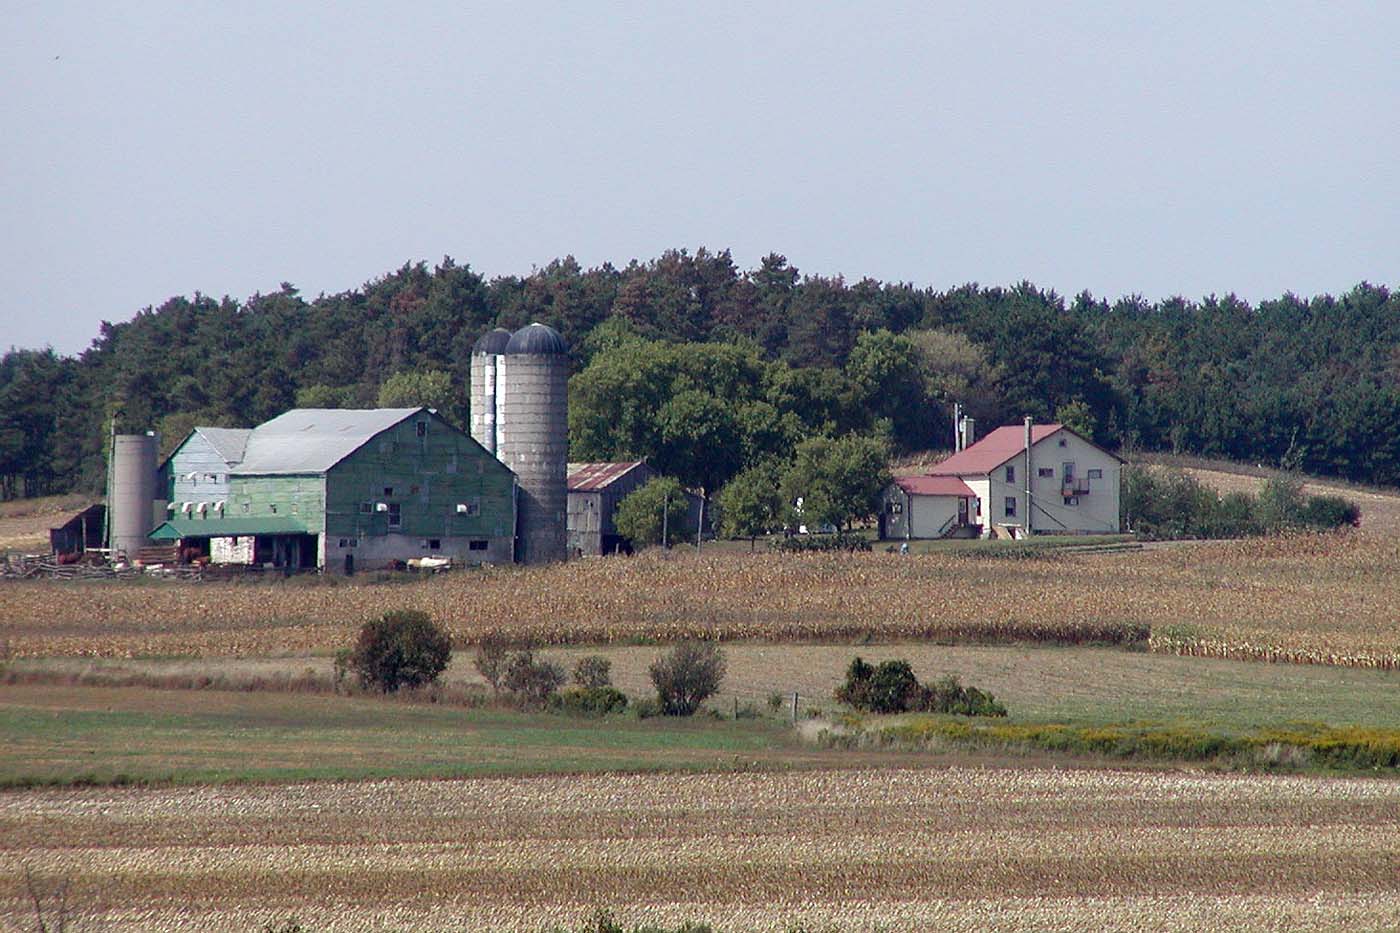 A typical North American grain farm with farms...